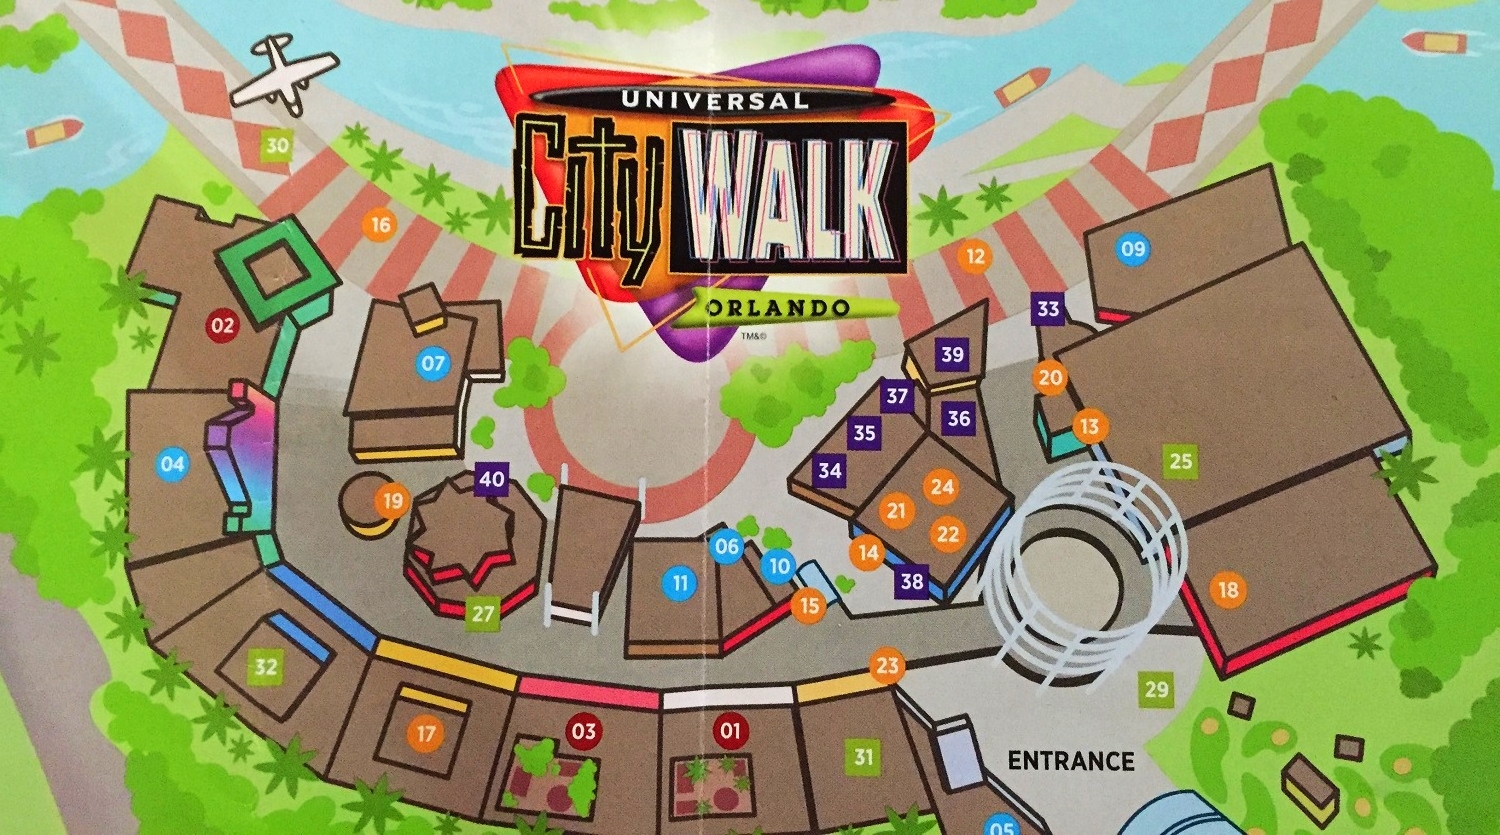 Universal Studios Store  Universal CityWalk Orlando